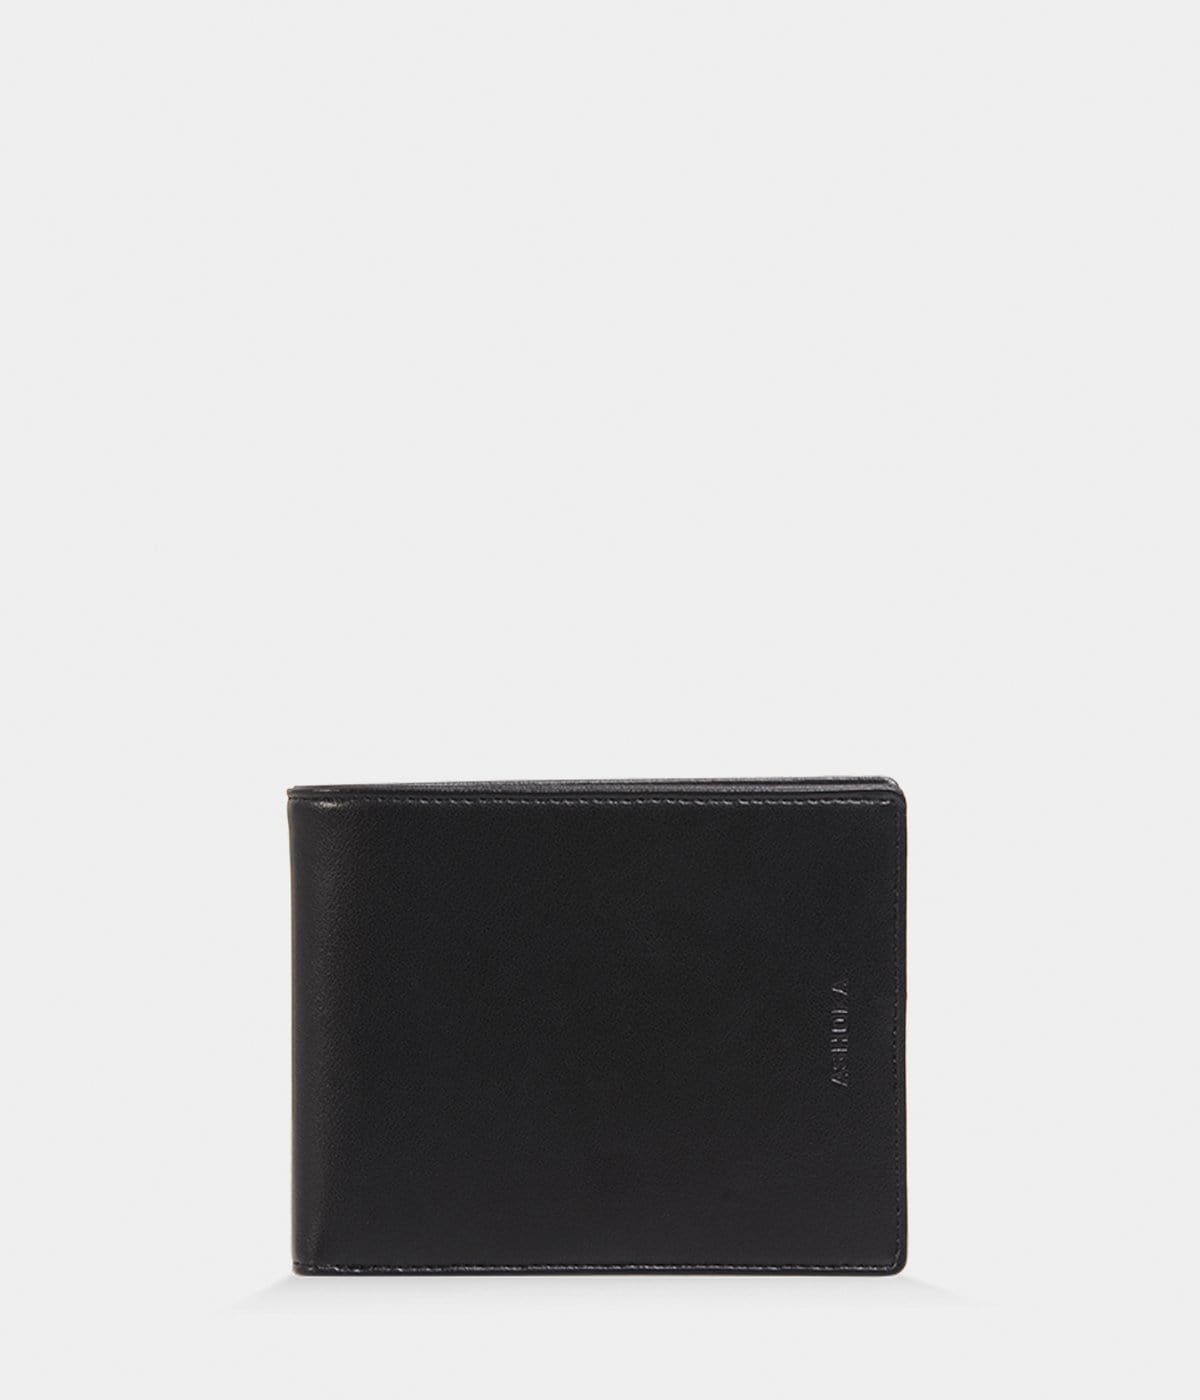 ASHOKA Paris Apple Leather Vegan Wallet | Black